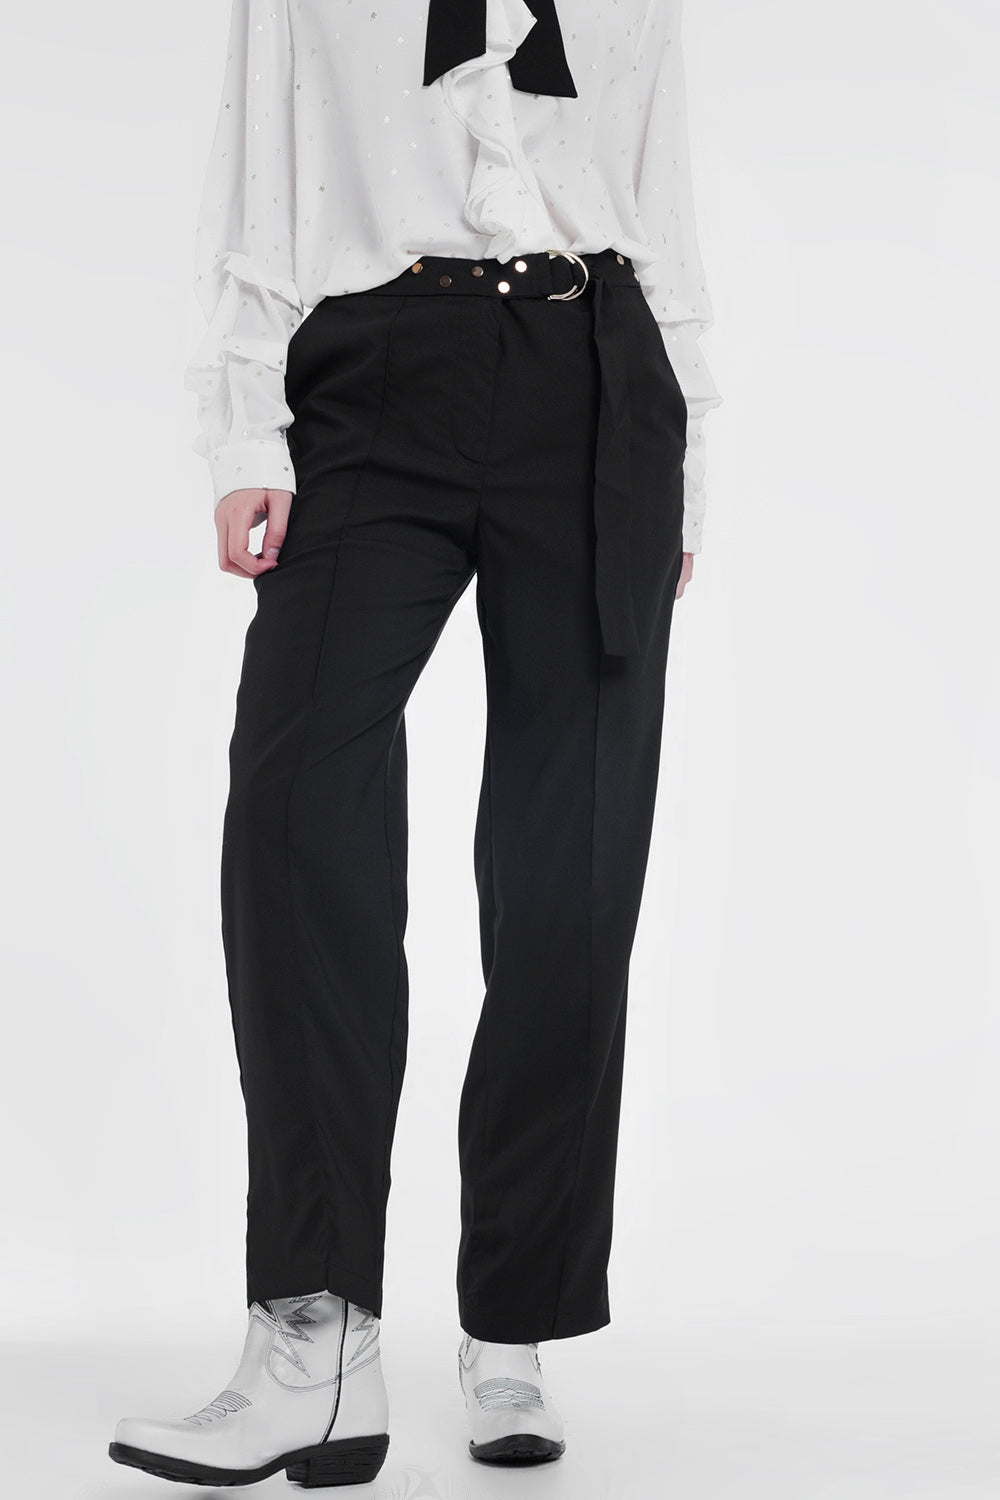 Black pants with wide legs and low hemPants